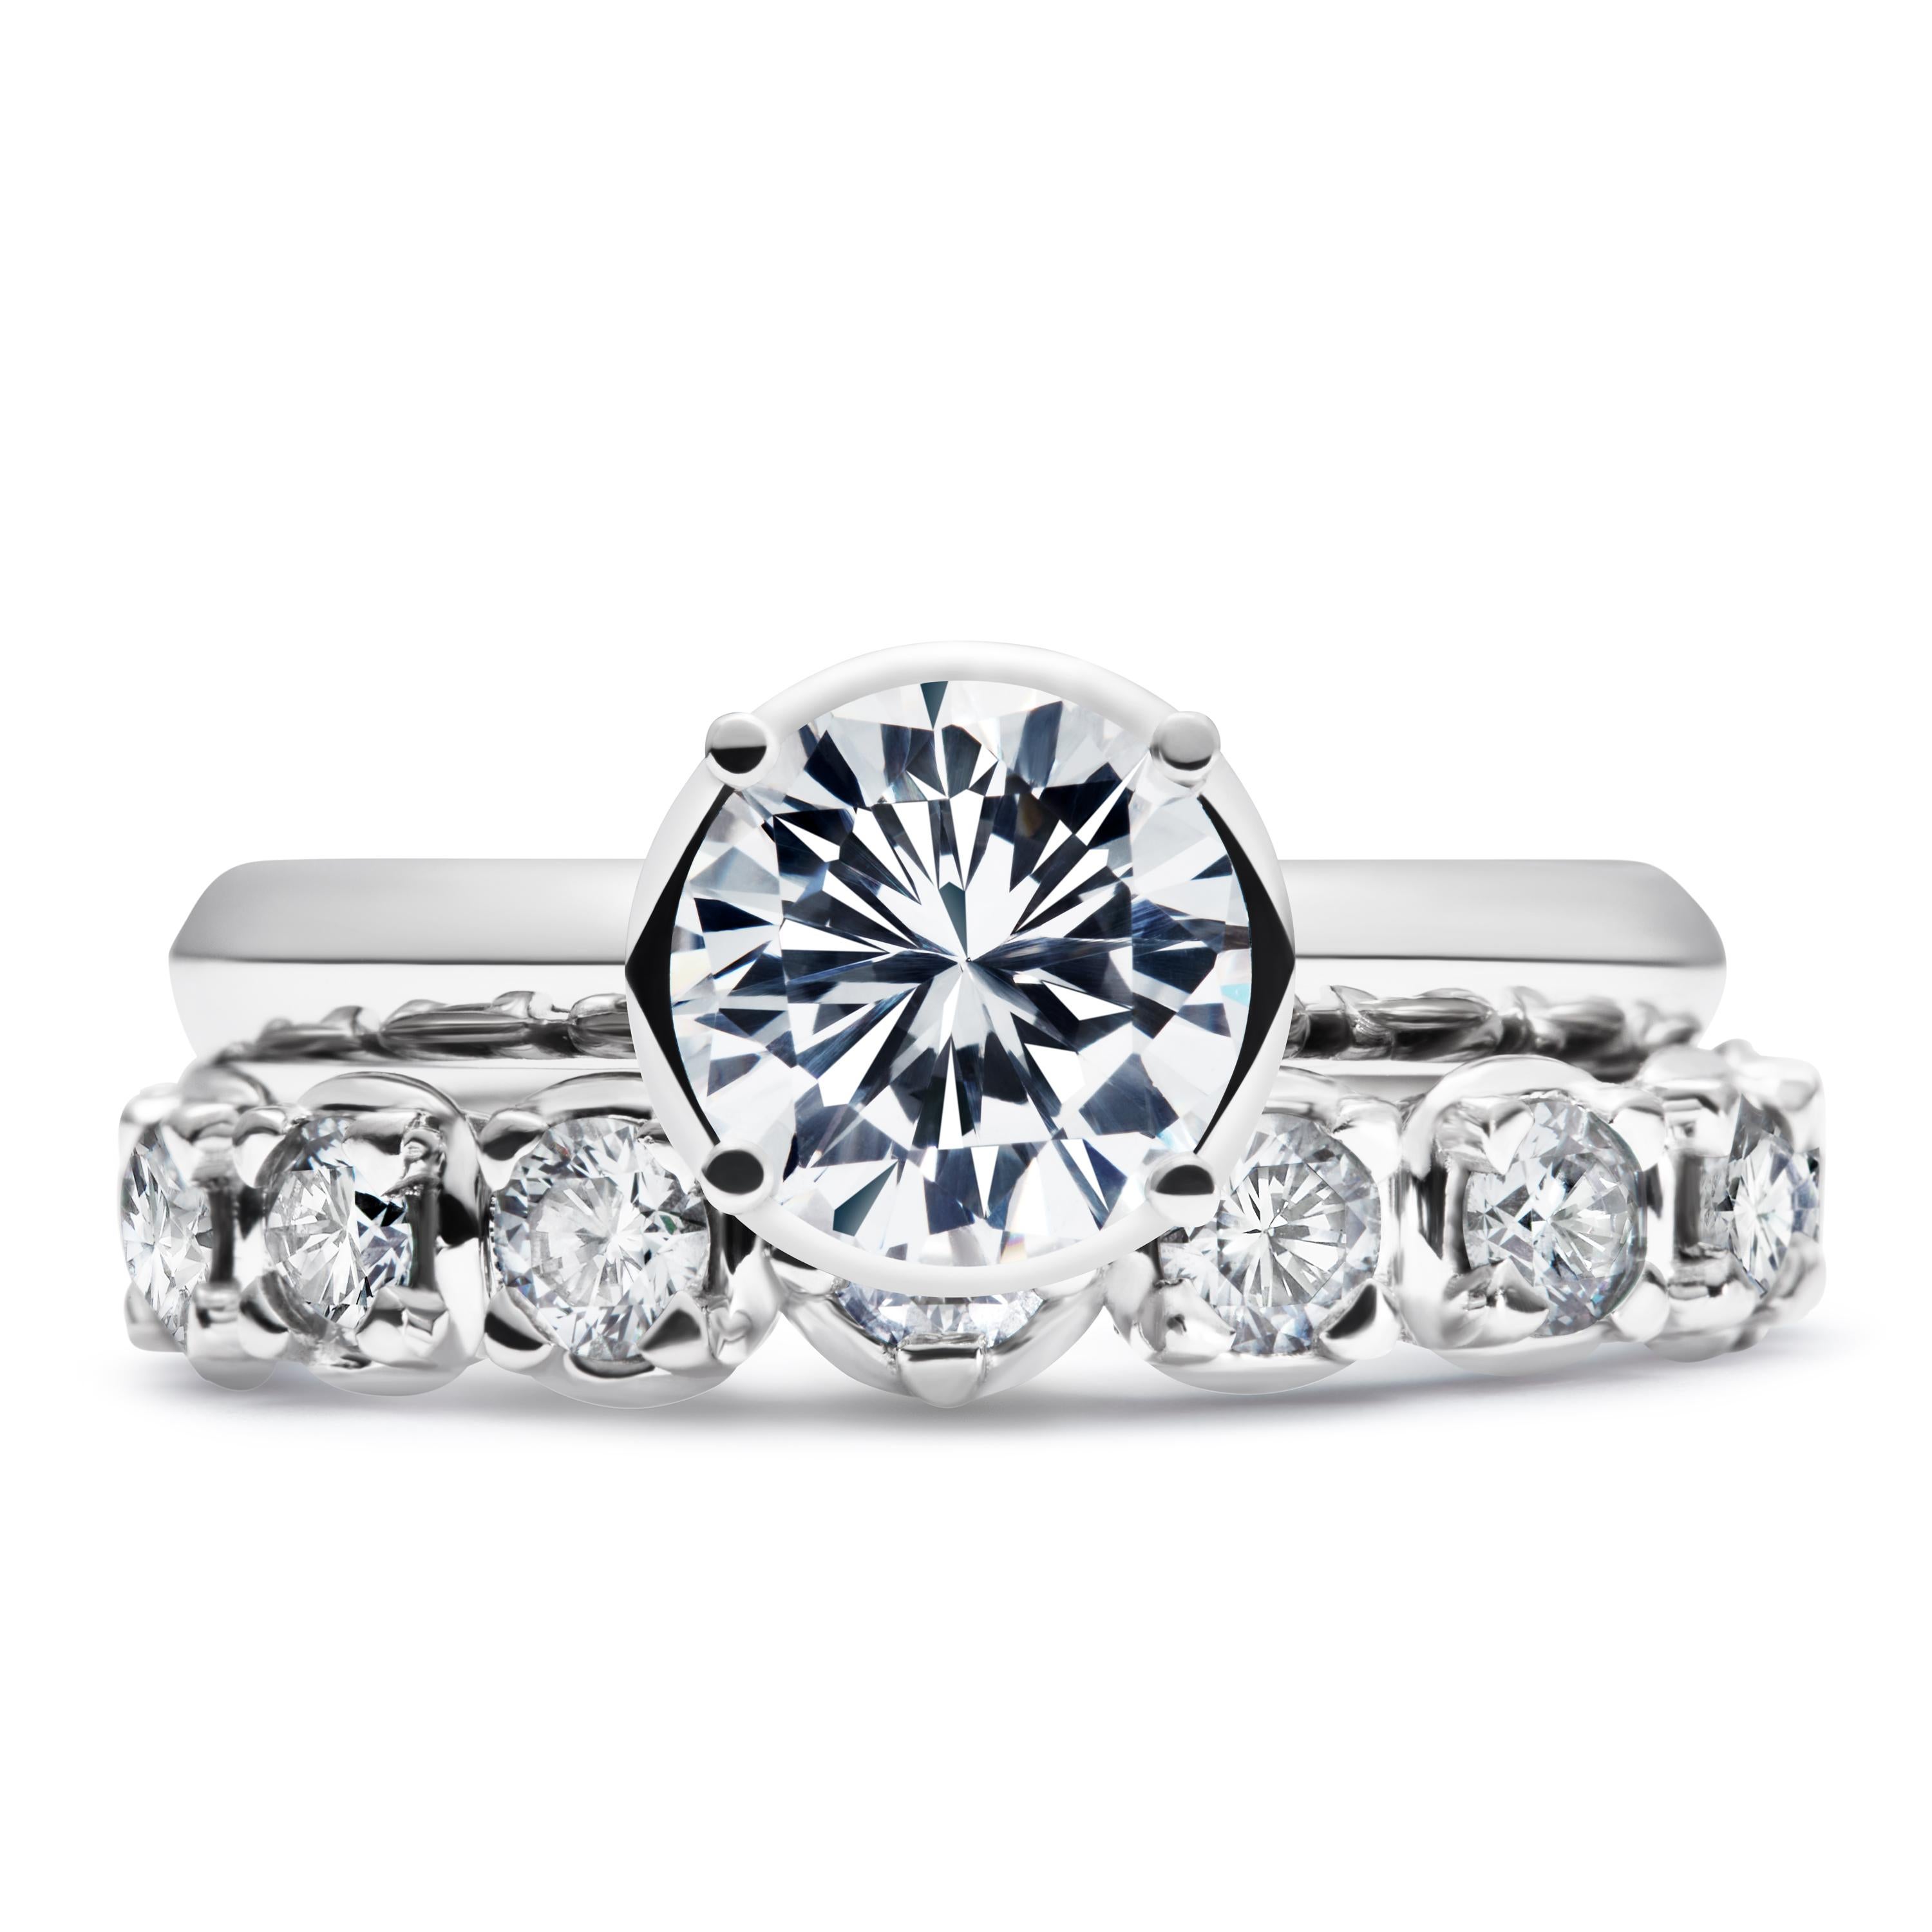 1.5 carat diamond ring